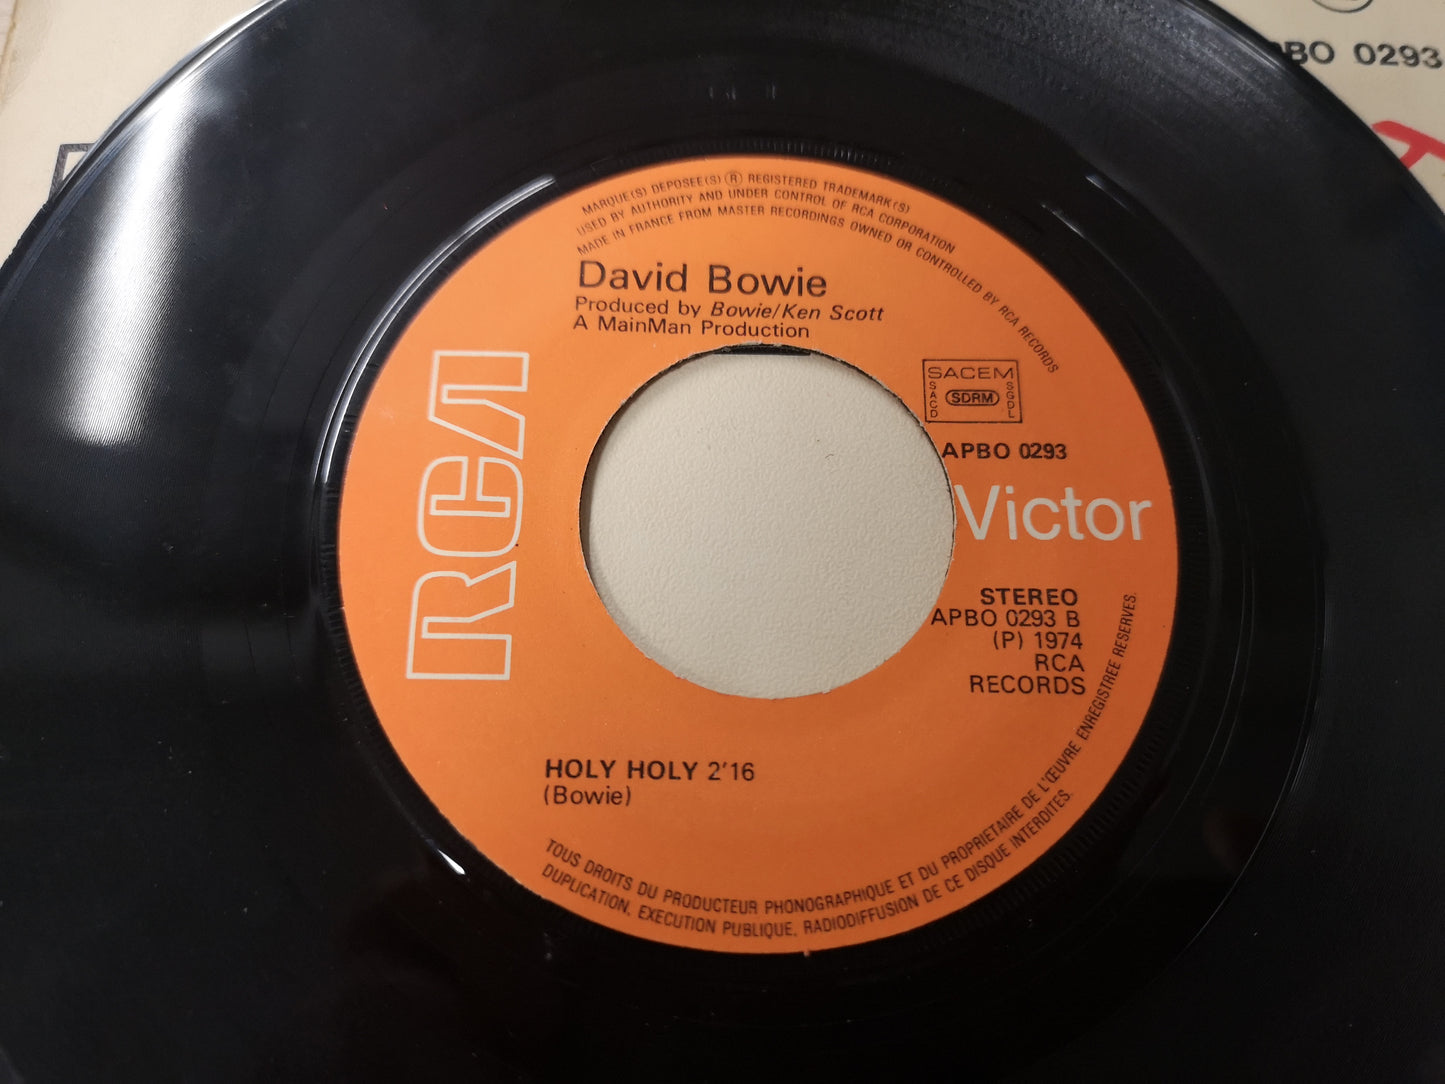 David Bowie "Diamond Dogs" Orig France 1974 VG+/VG+ (7" Single)